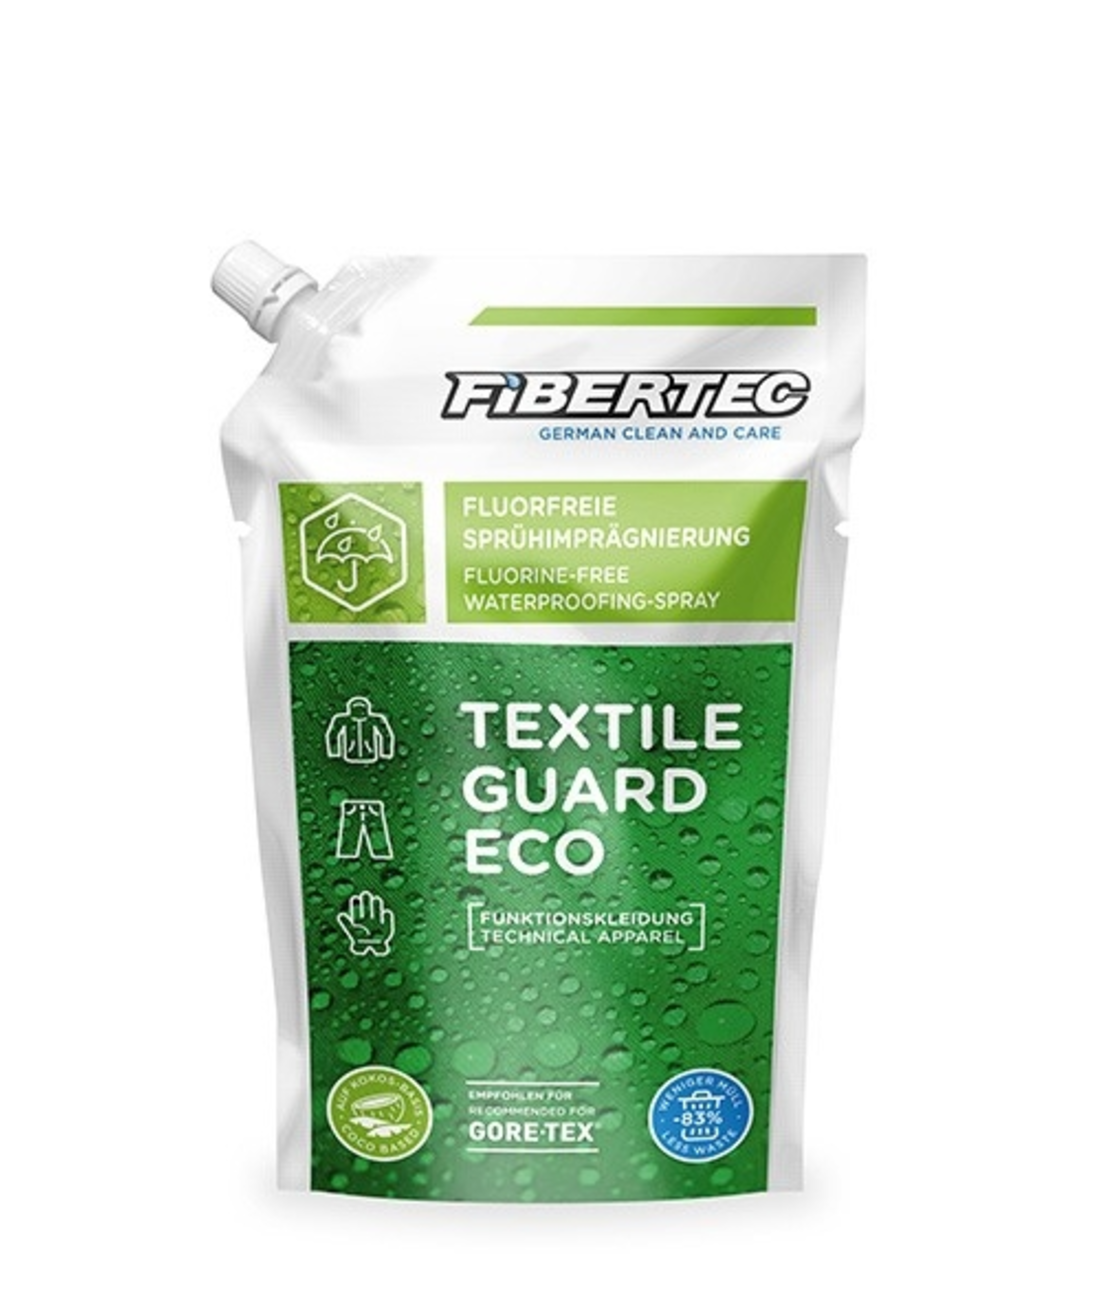 Textile Guard Eco Imprgnierspray - Nachfllpack